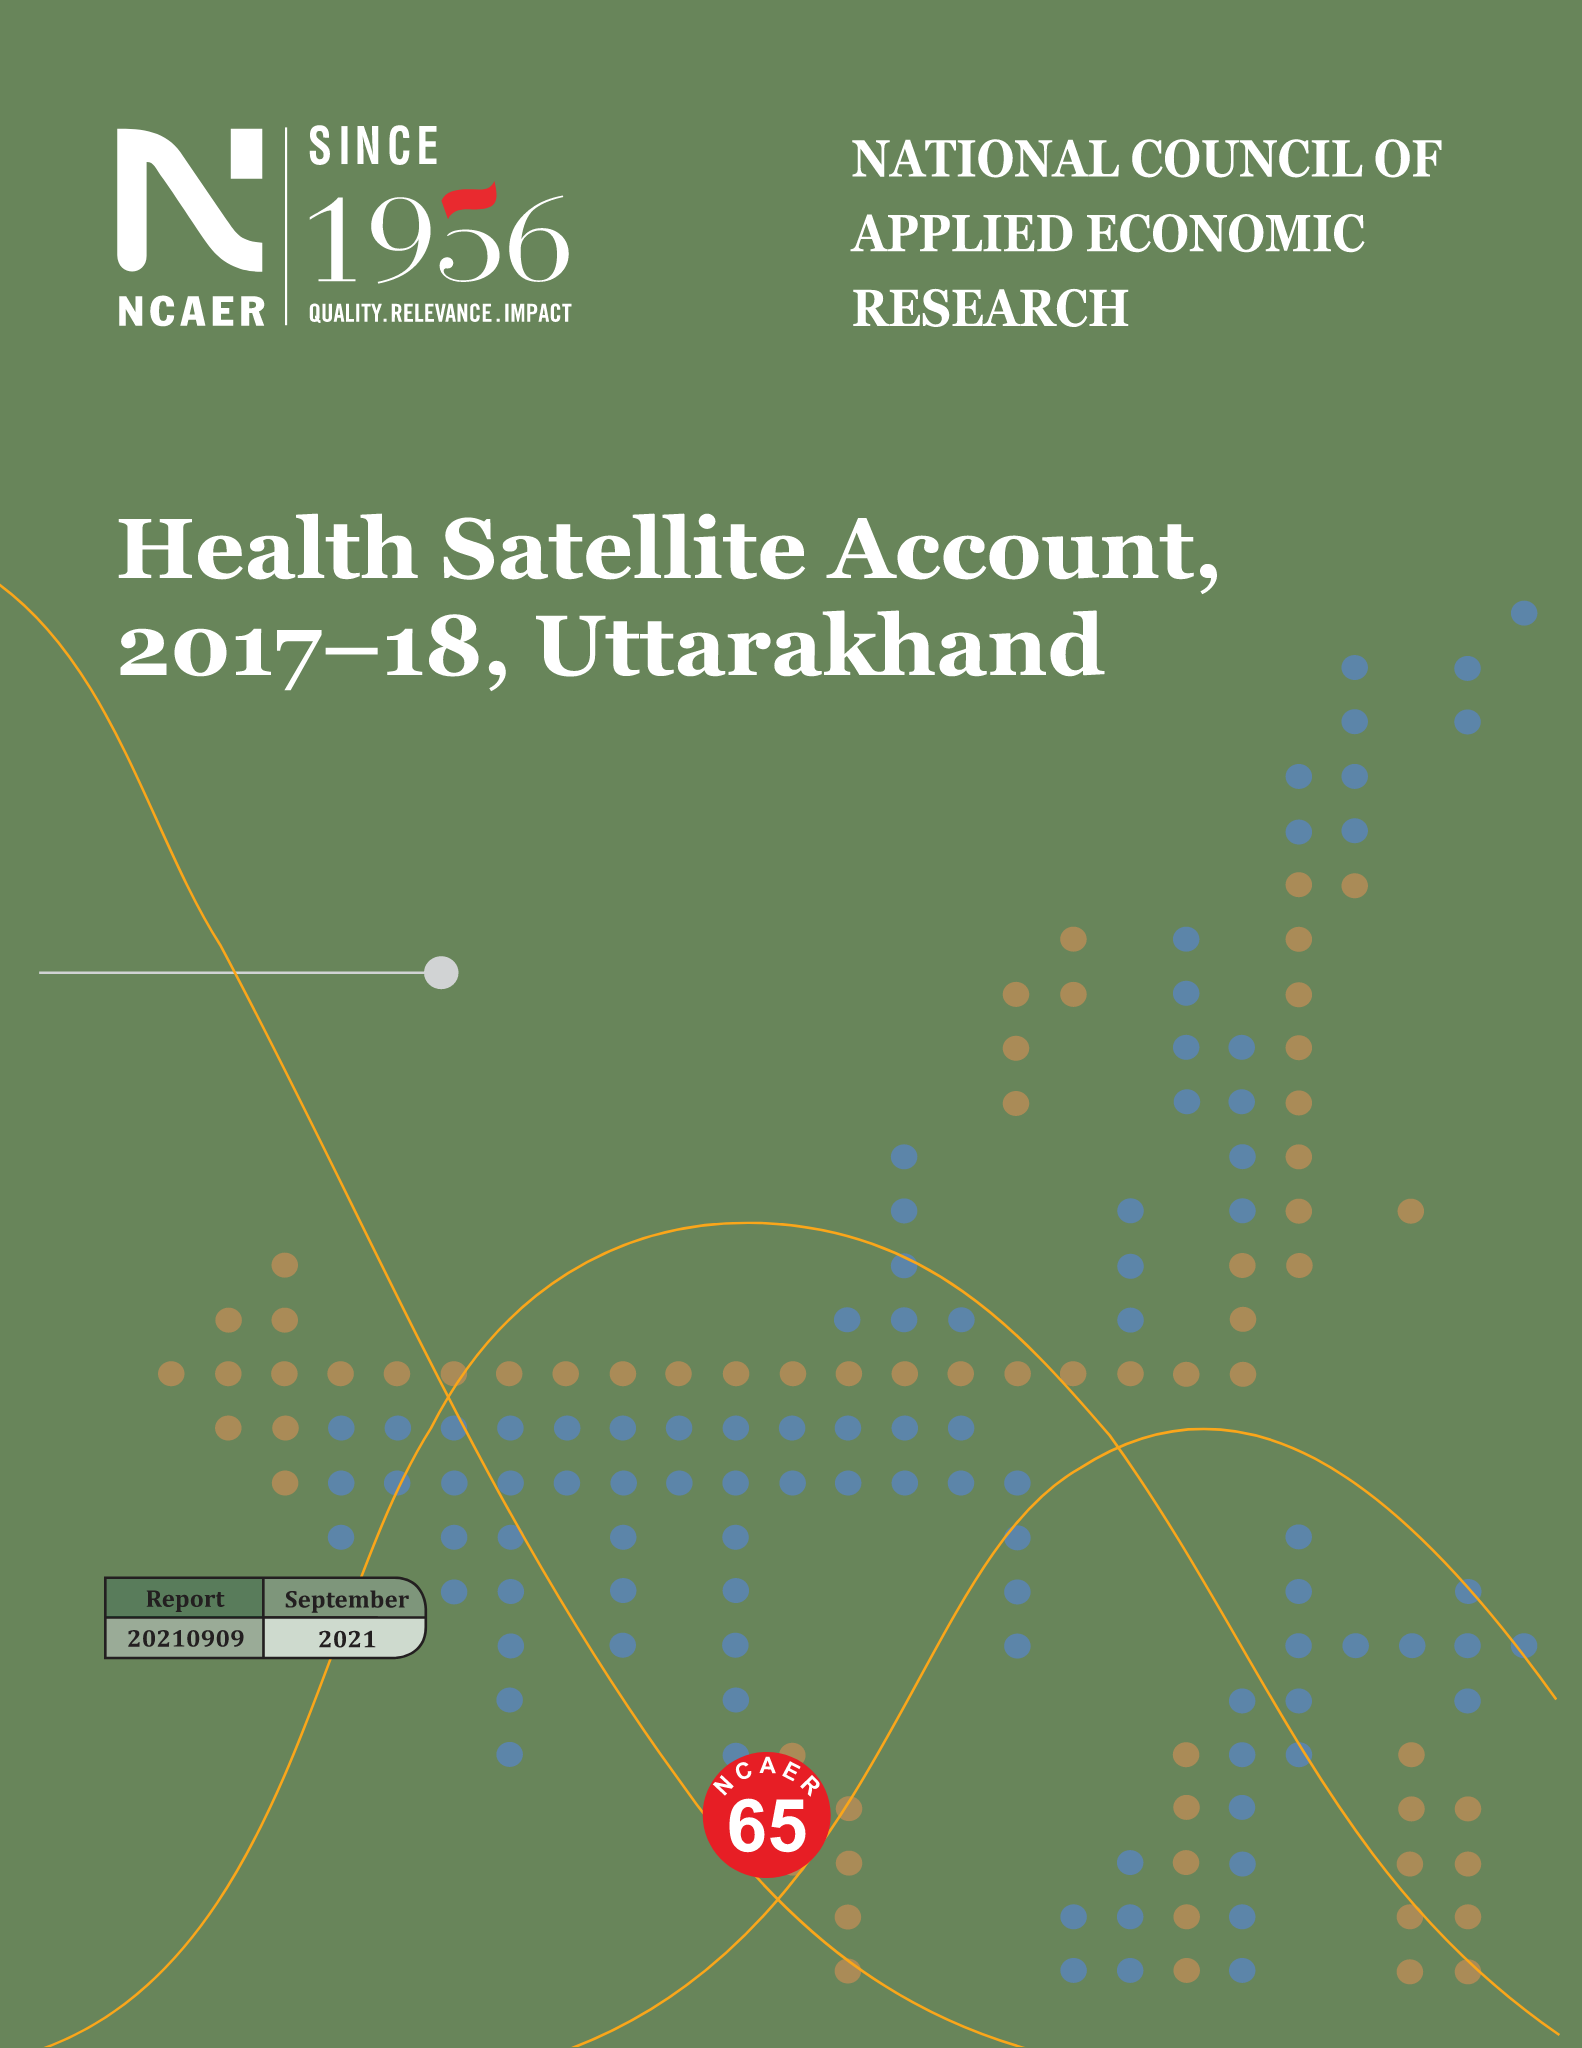 Health Satellite Account 2017-18, Uttarakhand